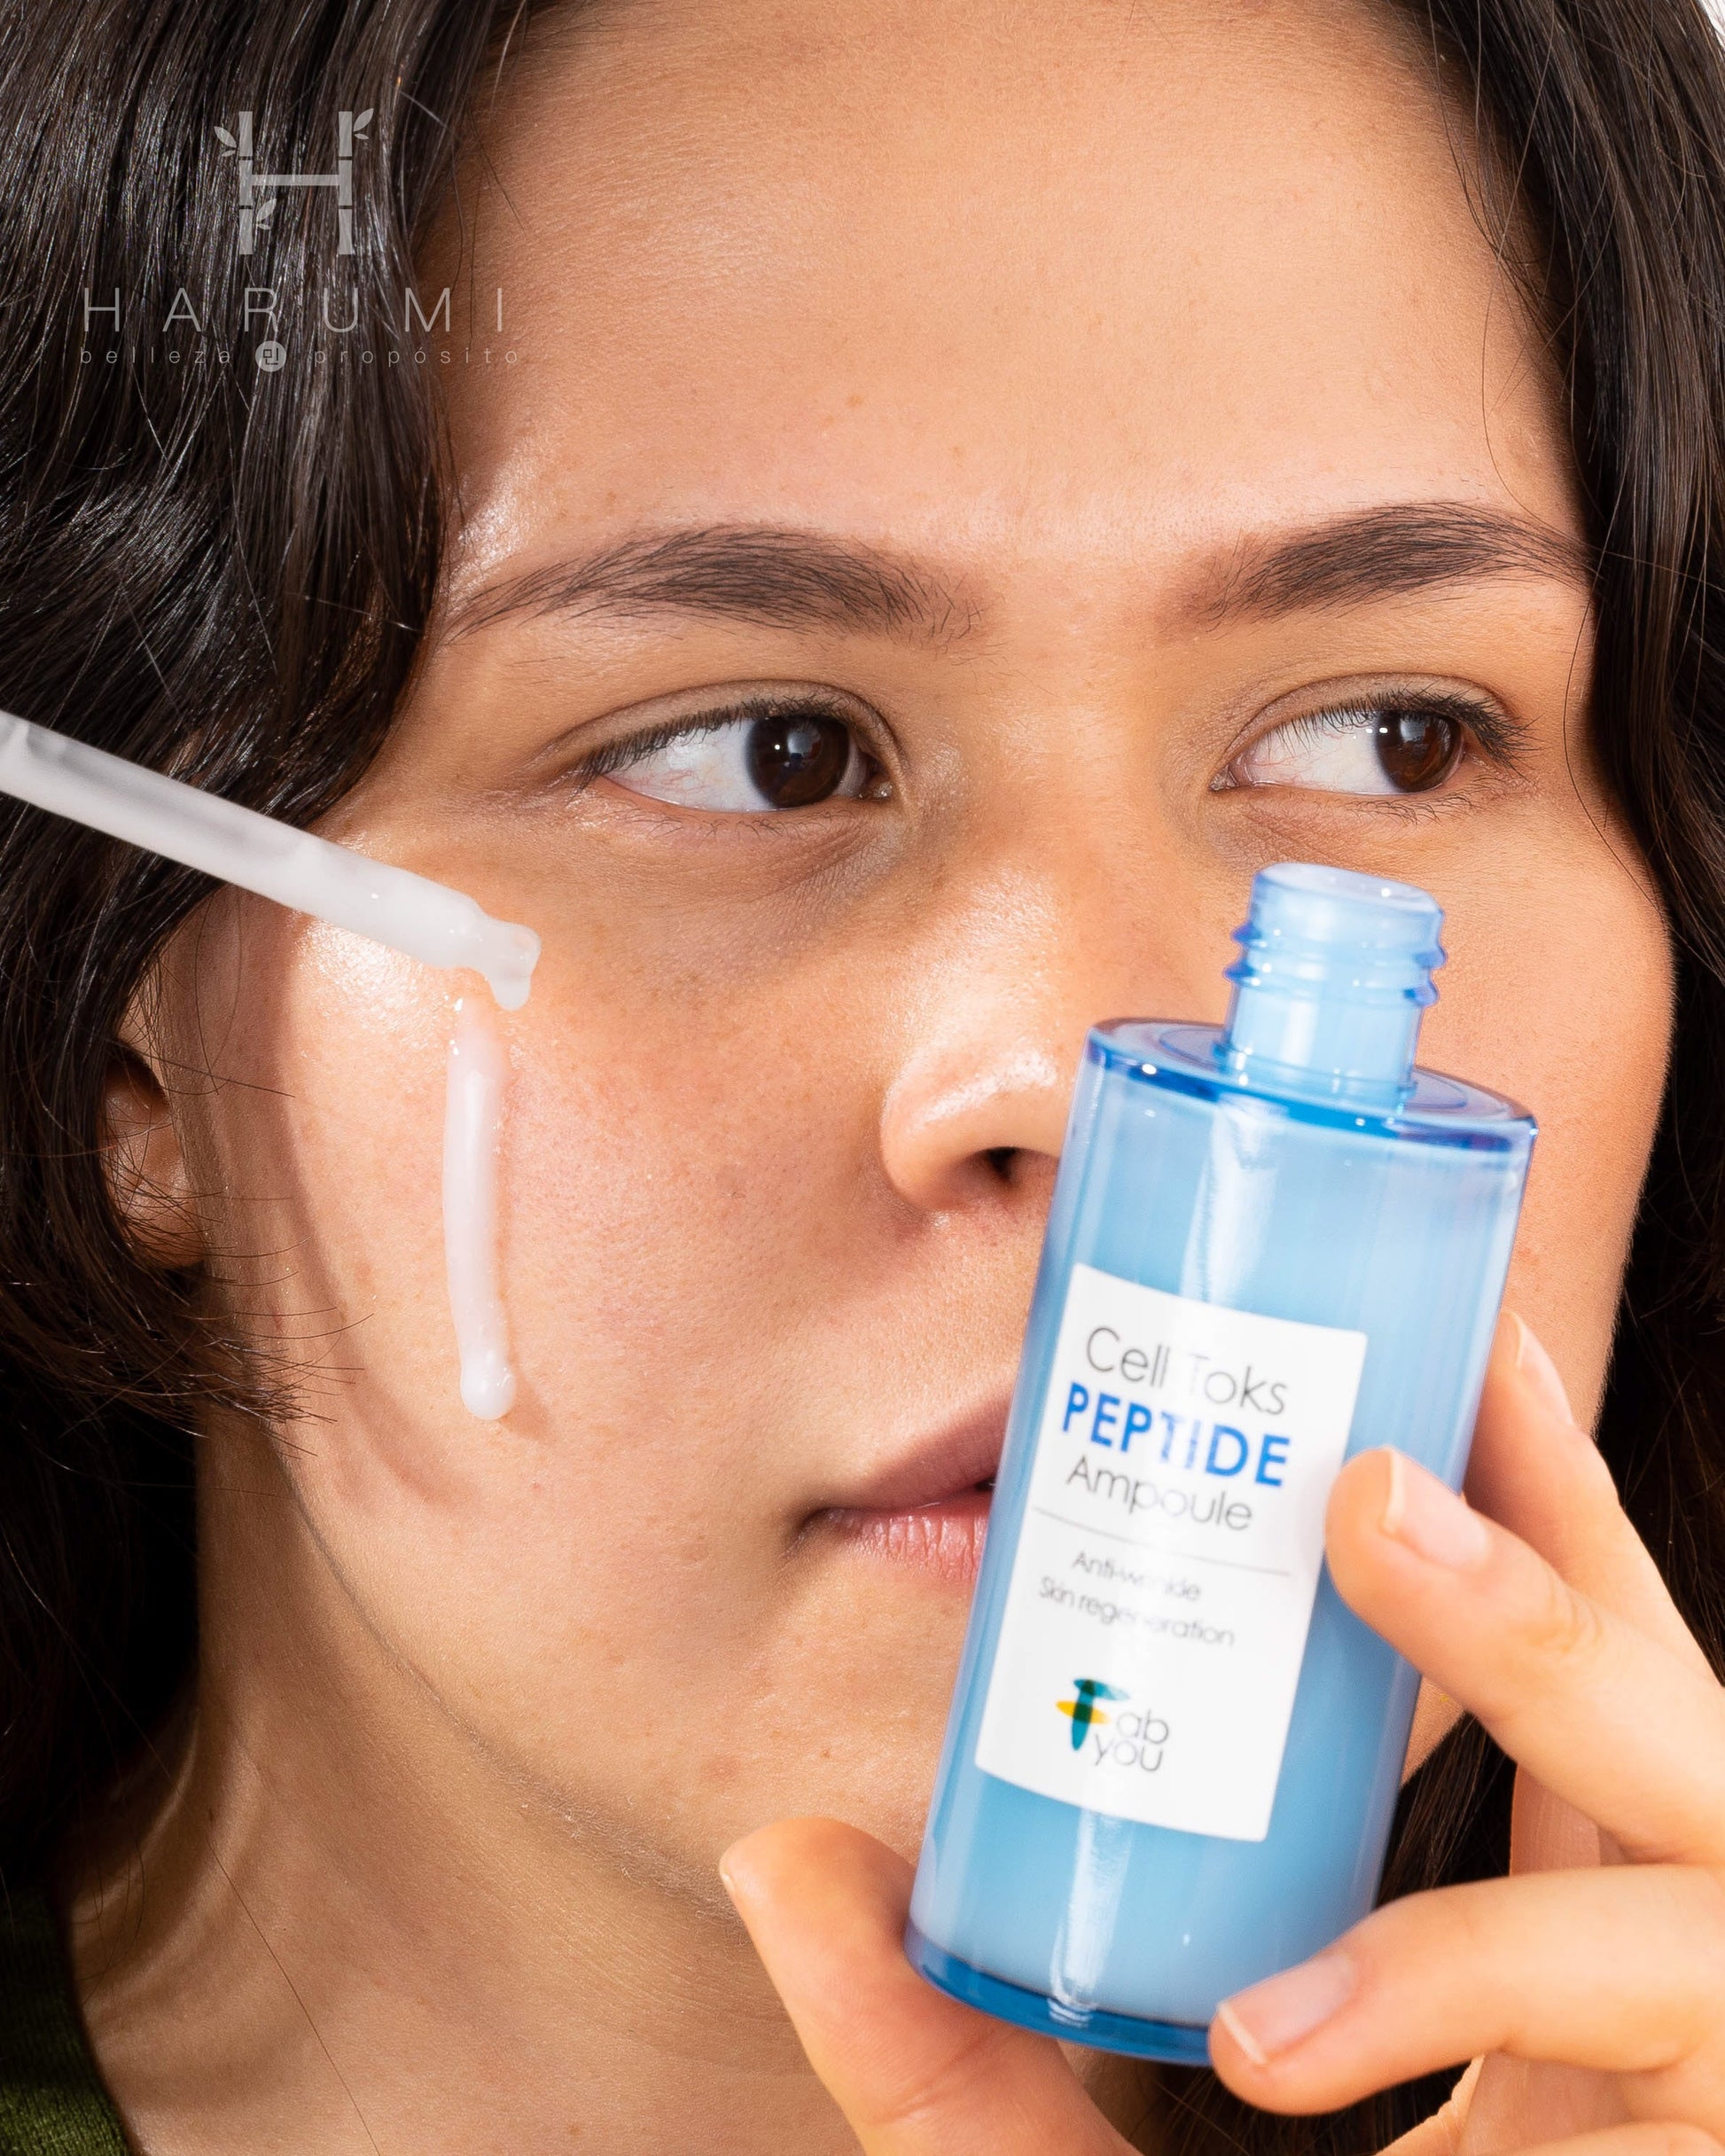 Fabyou Cell Toks Peptide Ampoule Skincare maquillaje productos de belleza coreanos en Colombia kbeauty